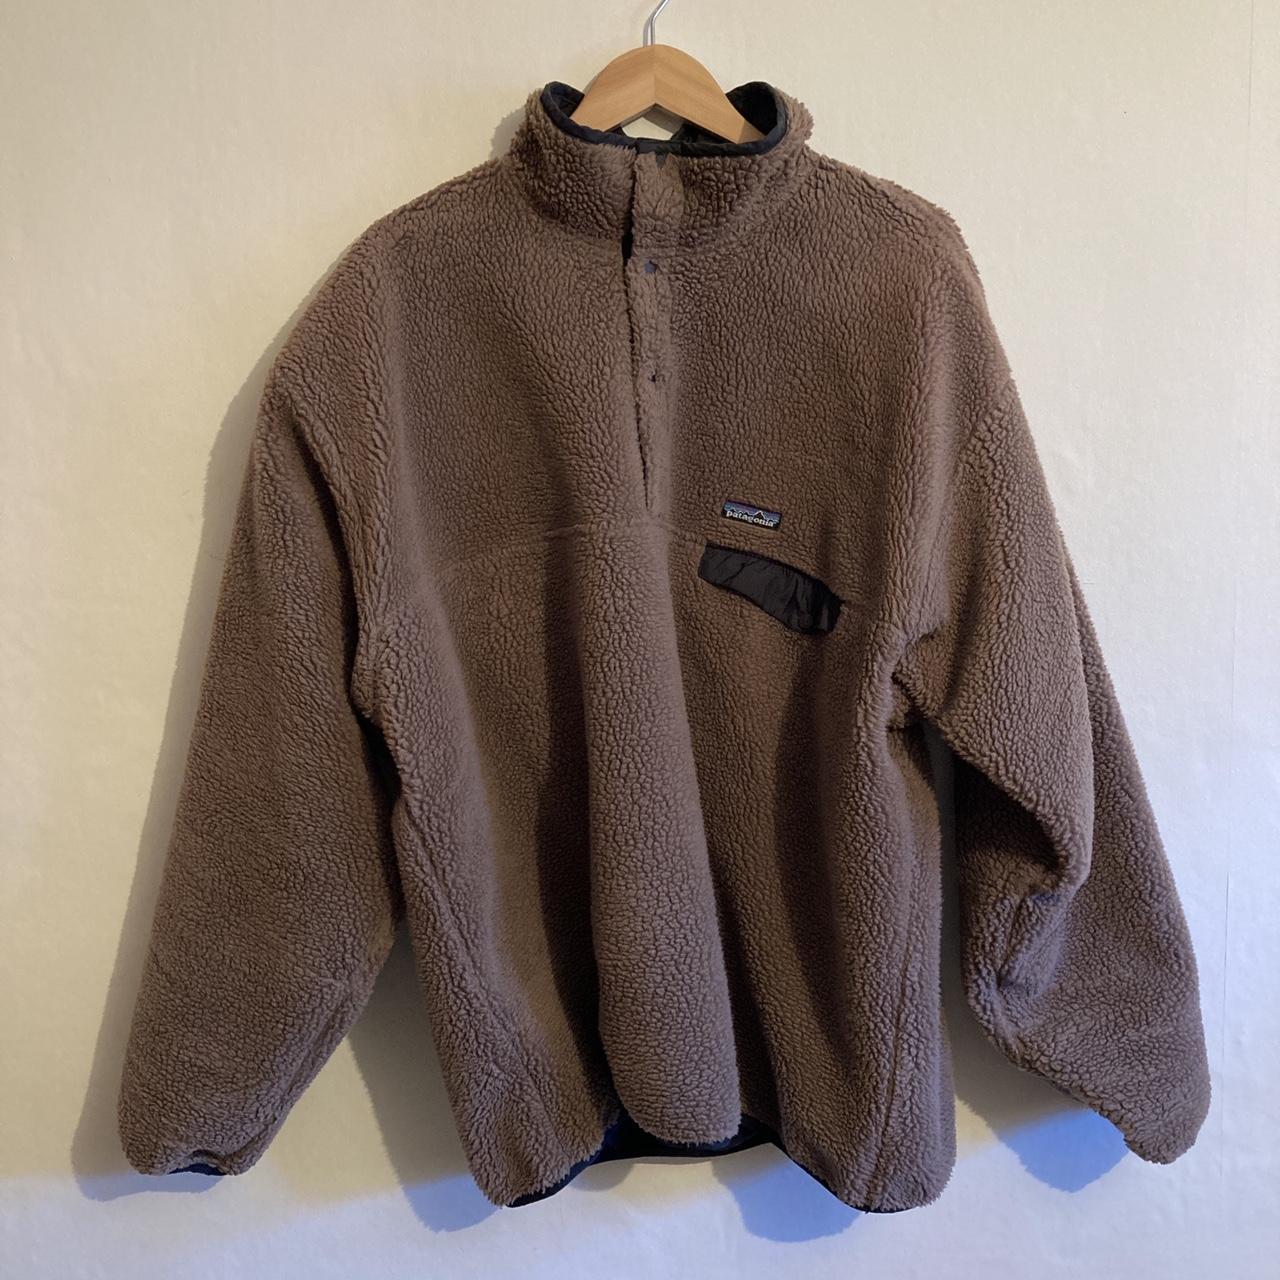 Vintage Patagonia Reversible Fleece Jacket Rare... - Depop